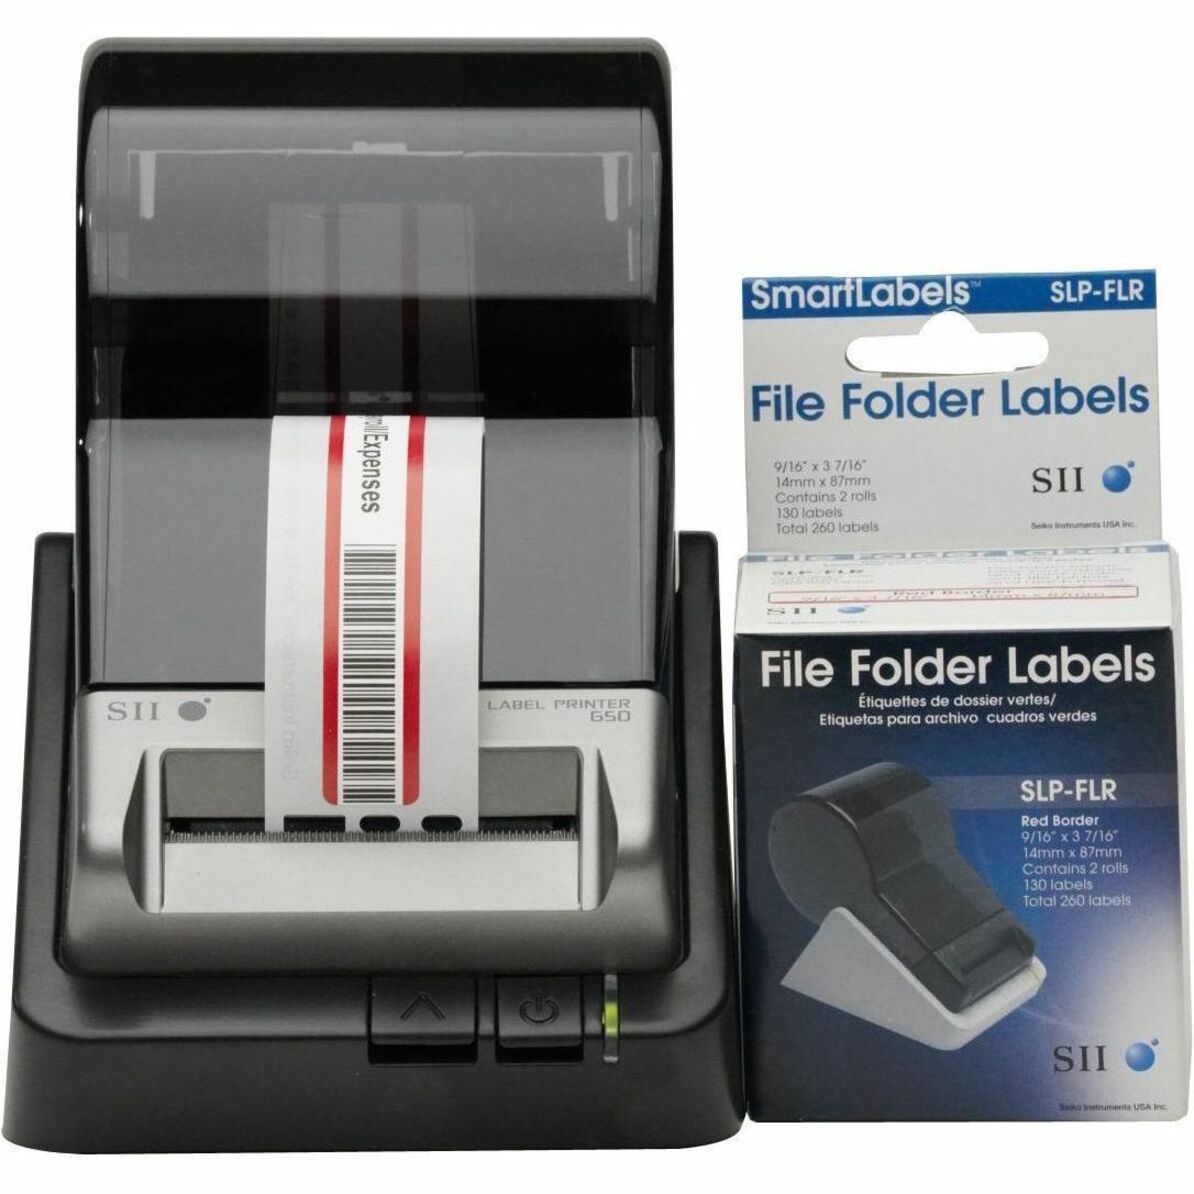 Seiko SLP-FLR SmartLabel File Folder Label, Self-adhesive, Red, 2 Roll